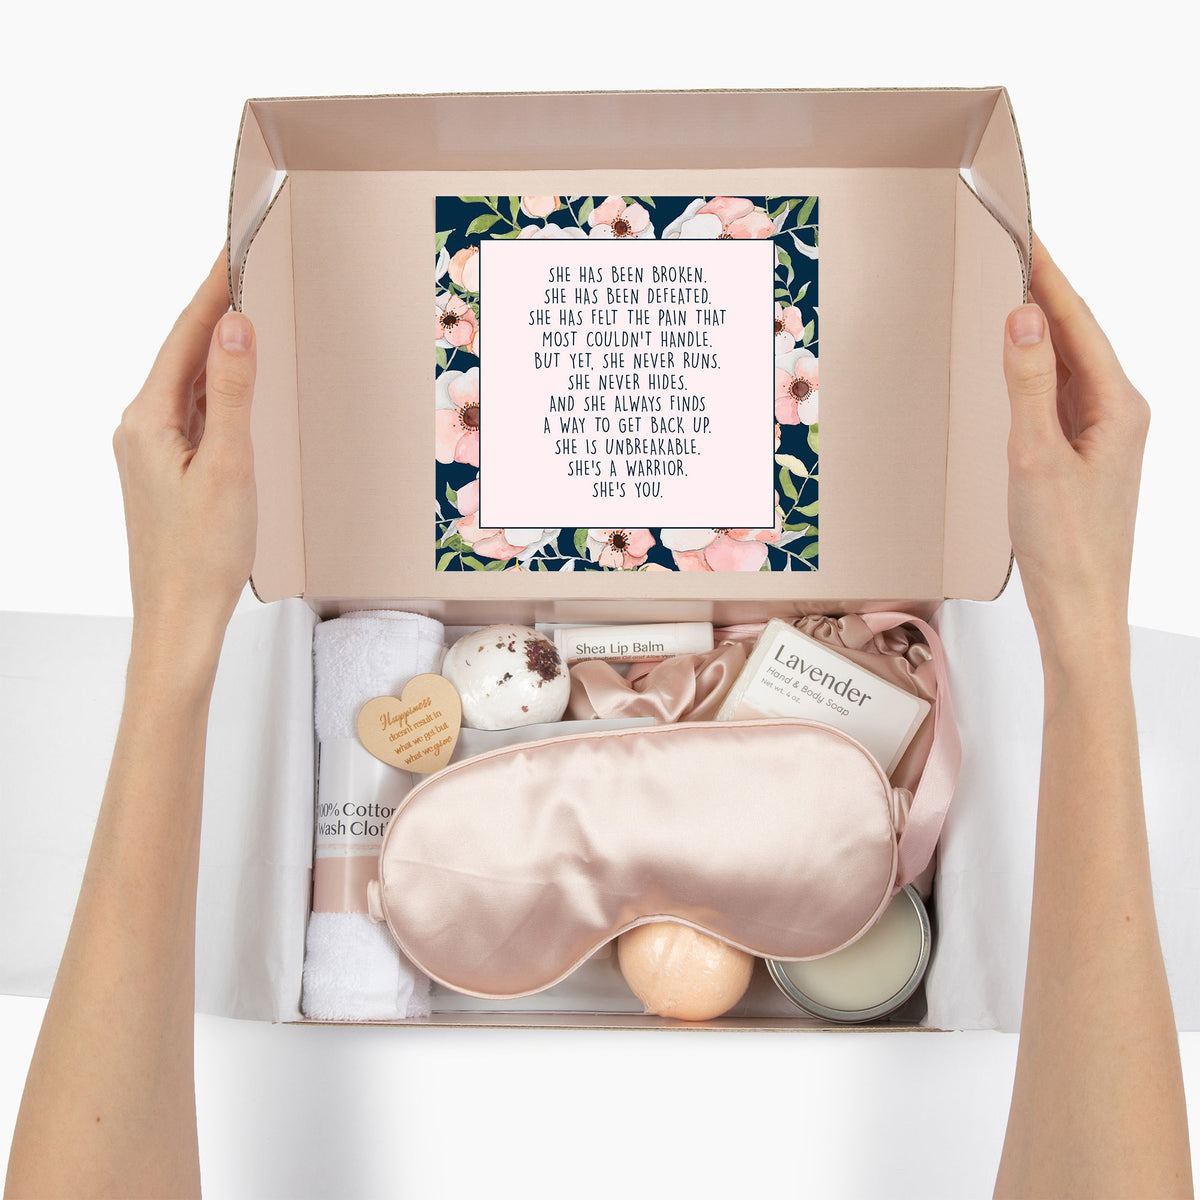 Thinking of You - Luxury Spa Gift Box